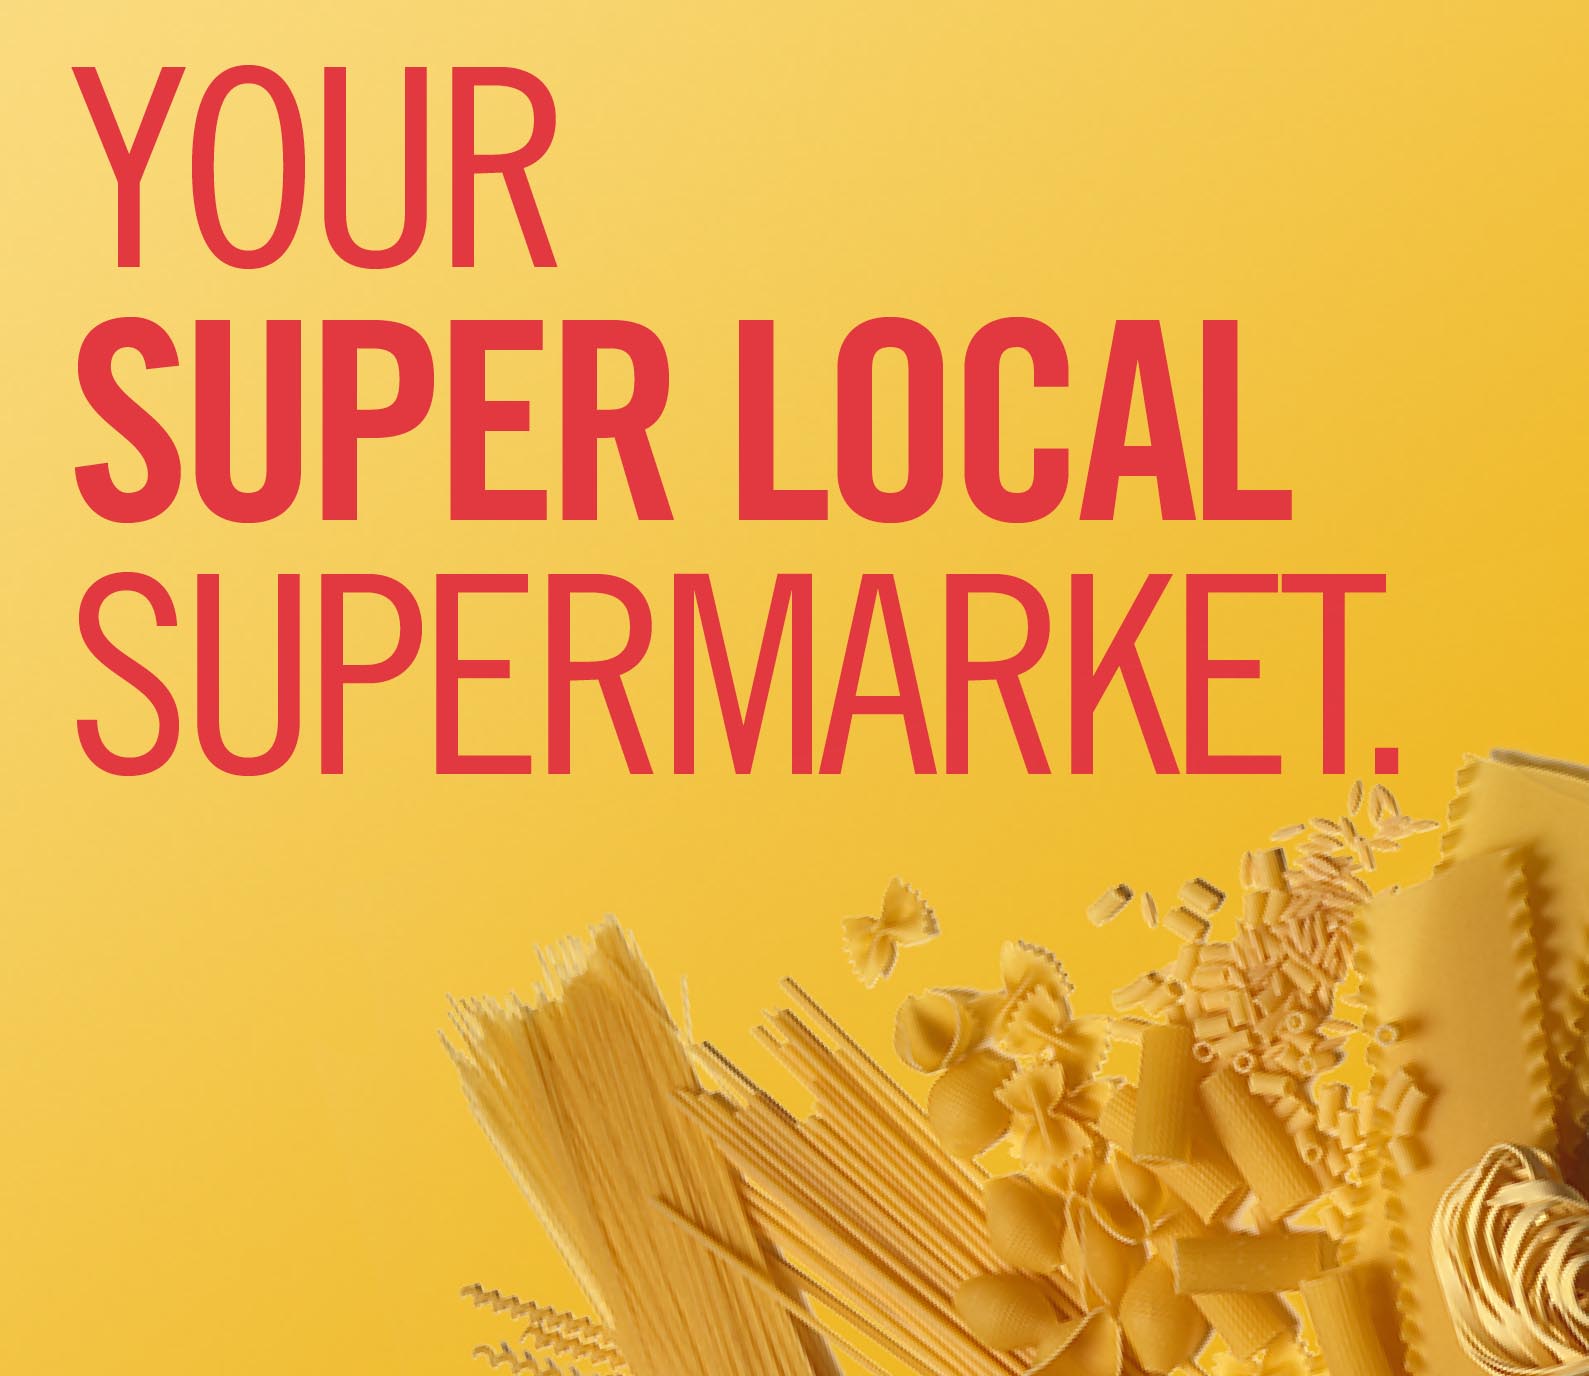 Your super local supermarket